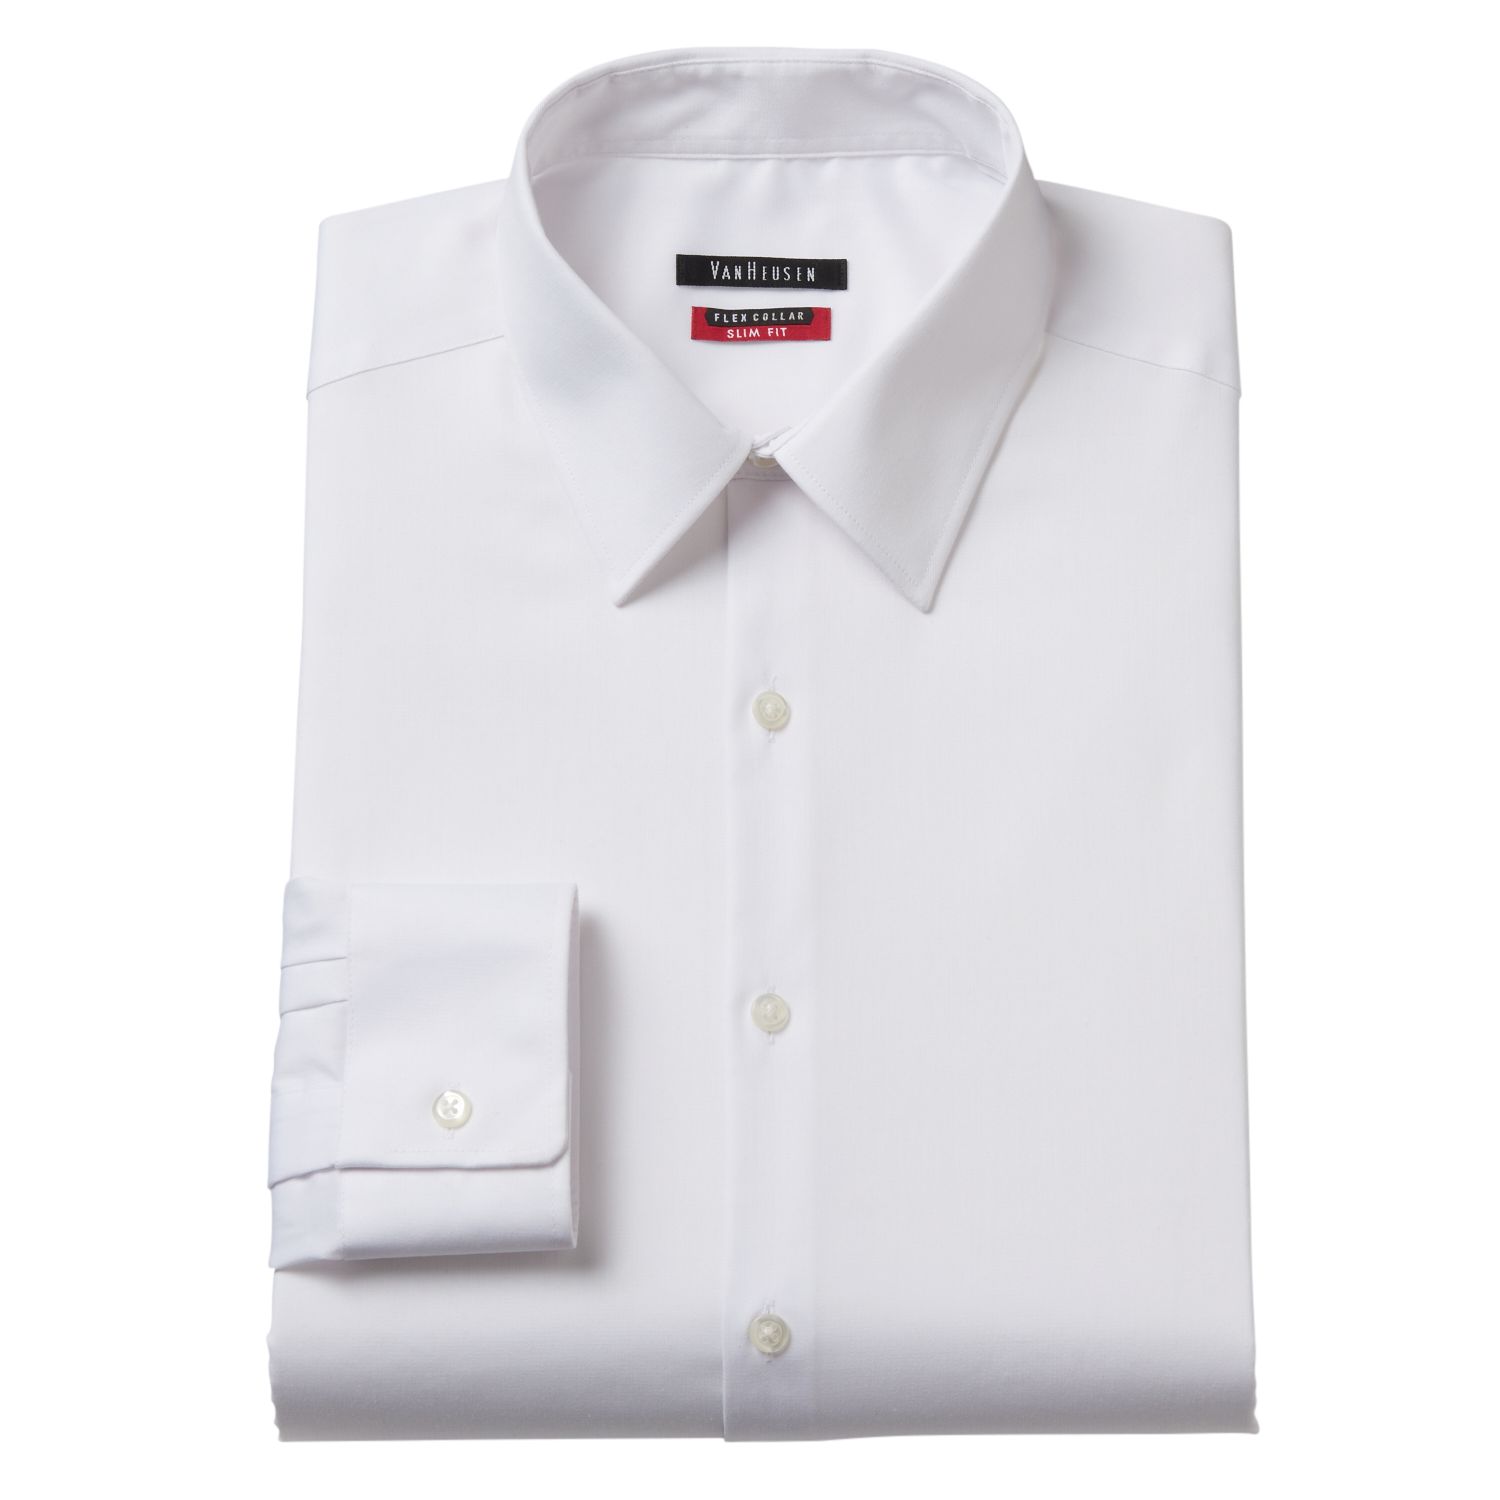 van heusen white shirt price